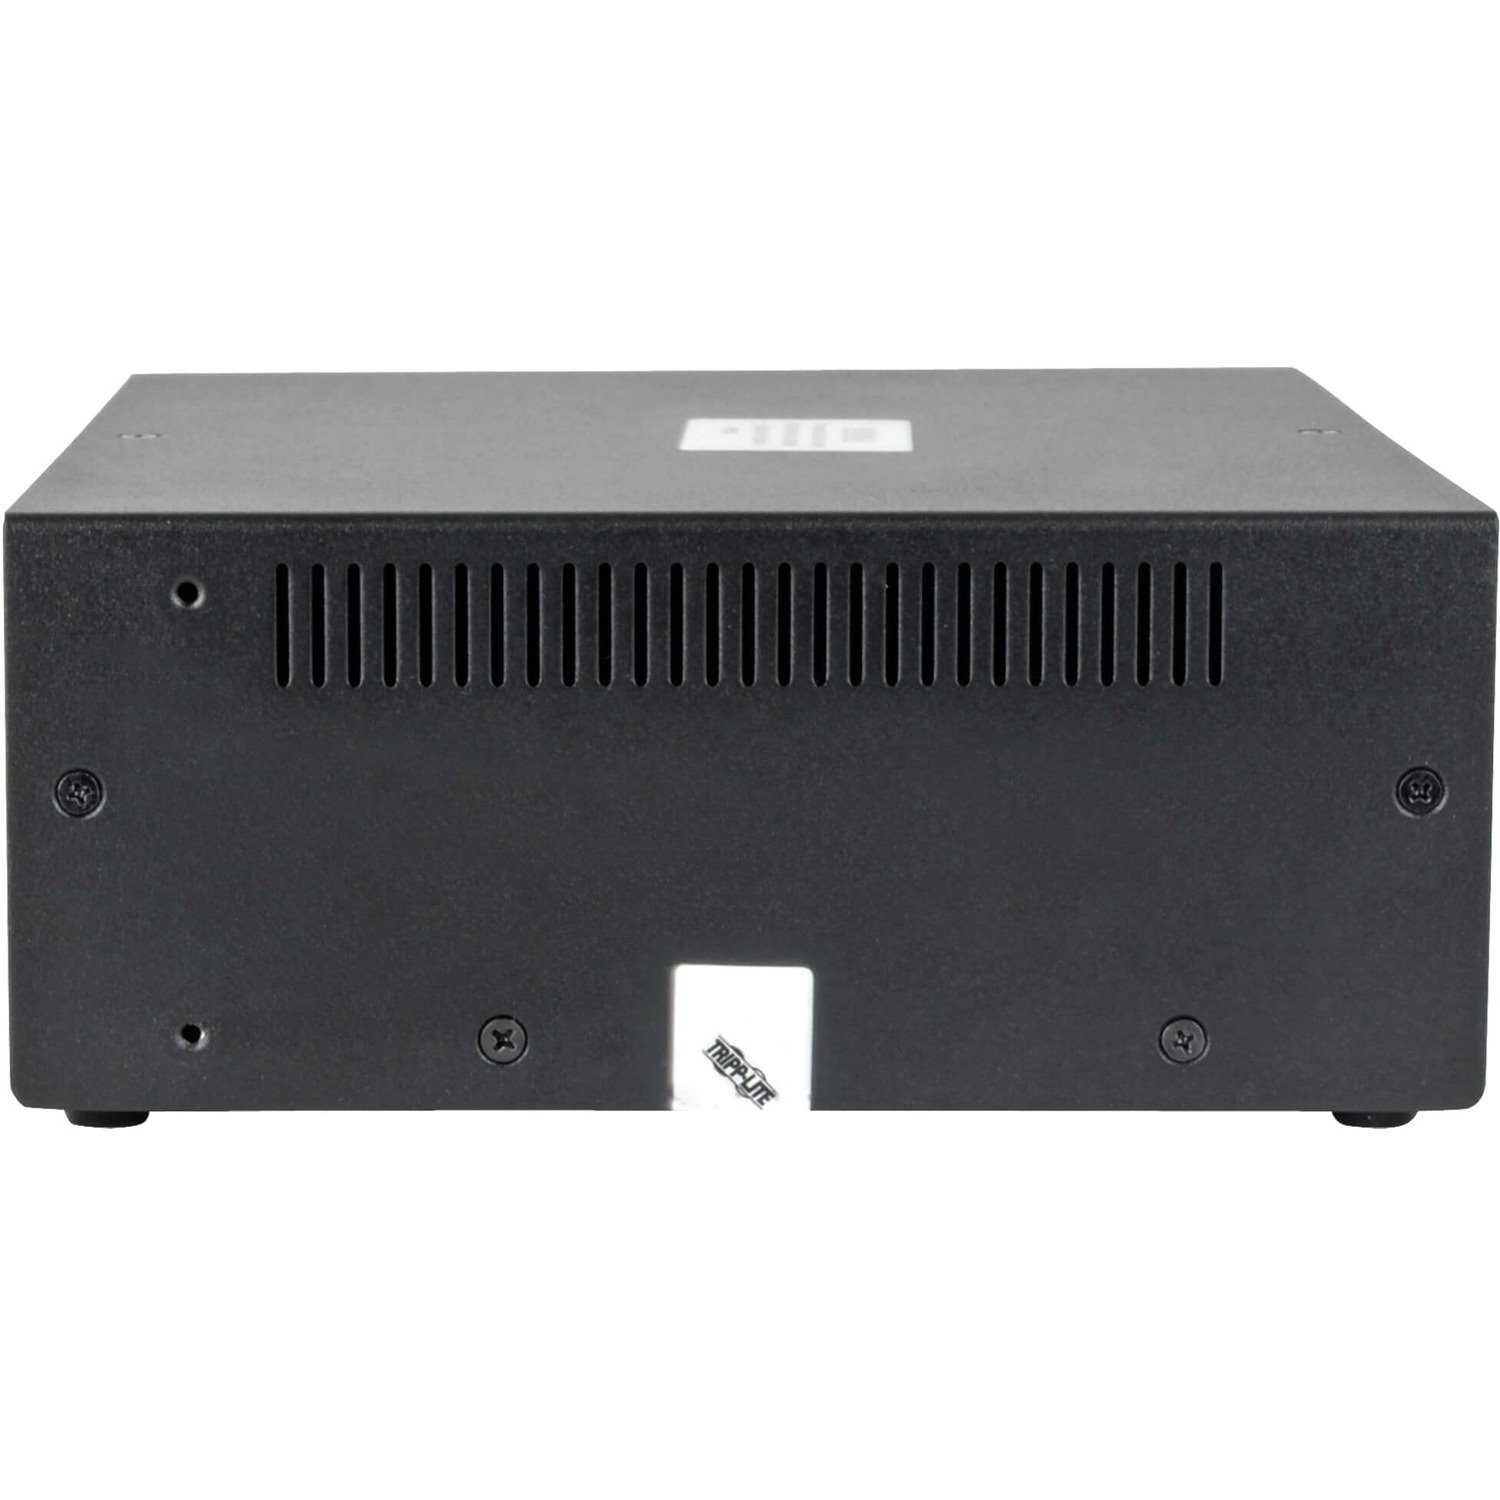 Tripp Lite by Eaton Secure KVM Switch, 4-Port, Dual Monitor, DVI to DVI, NIAP PP3.0 Certified, Audio